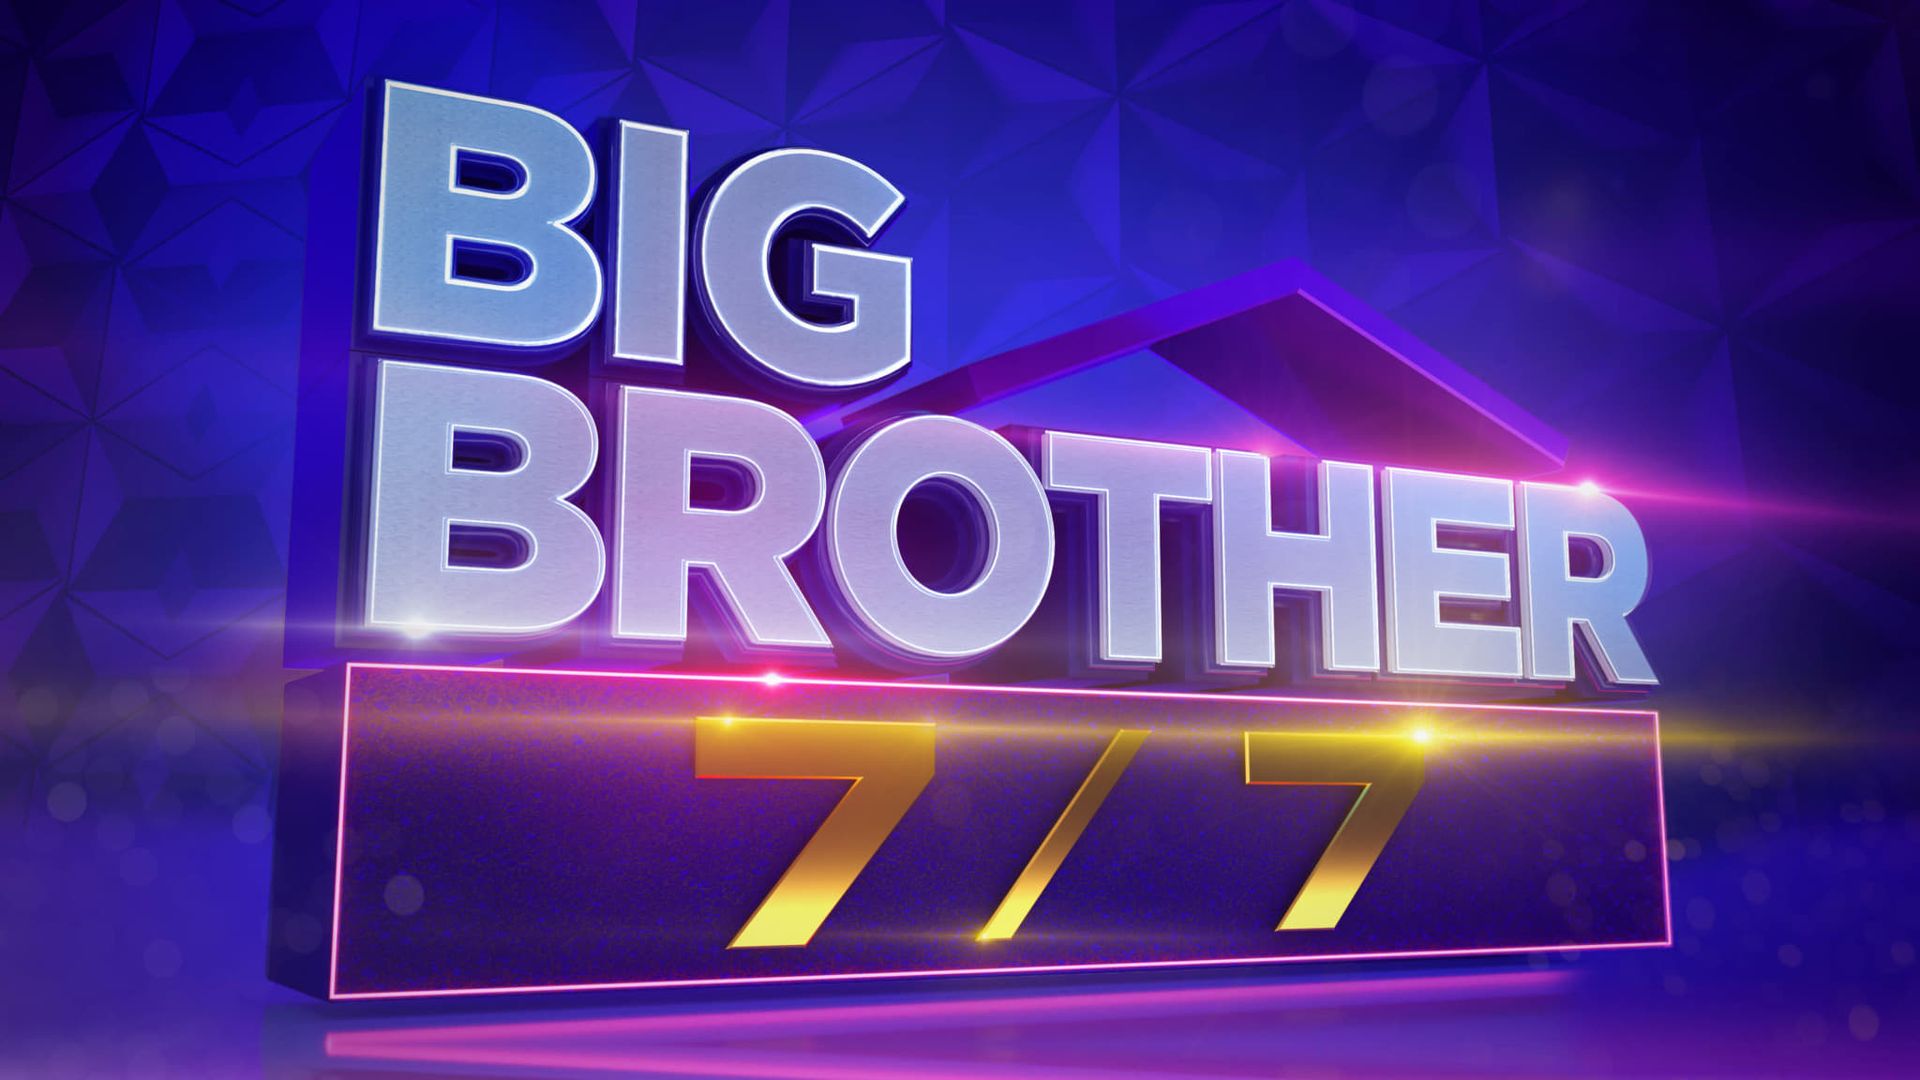 Big Brother 7/7 background